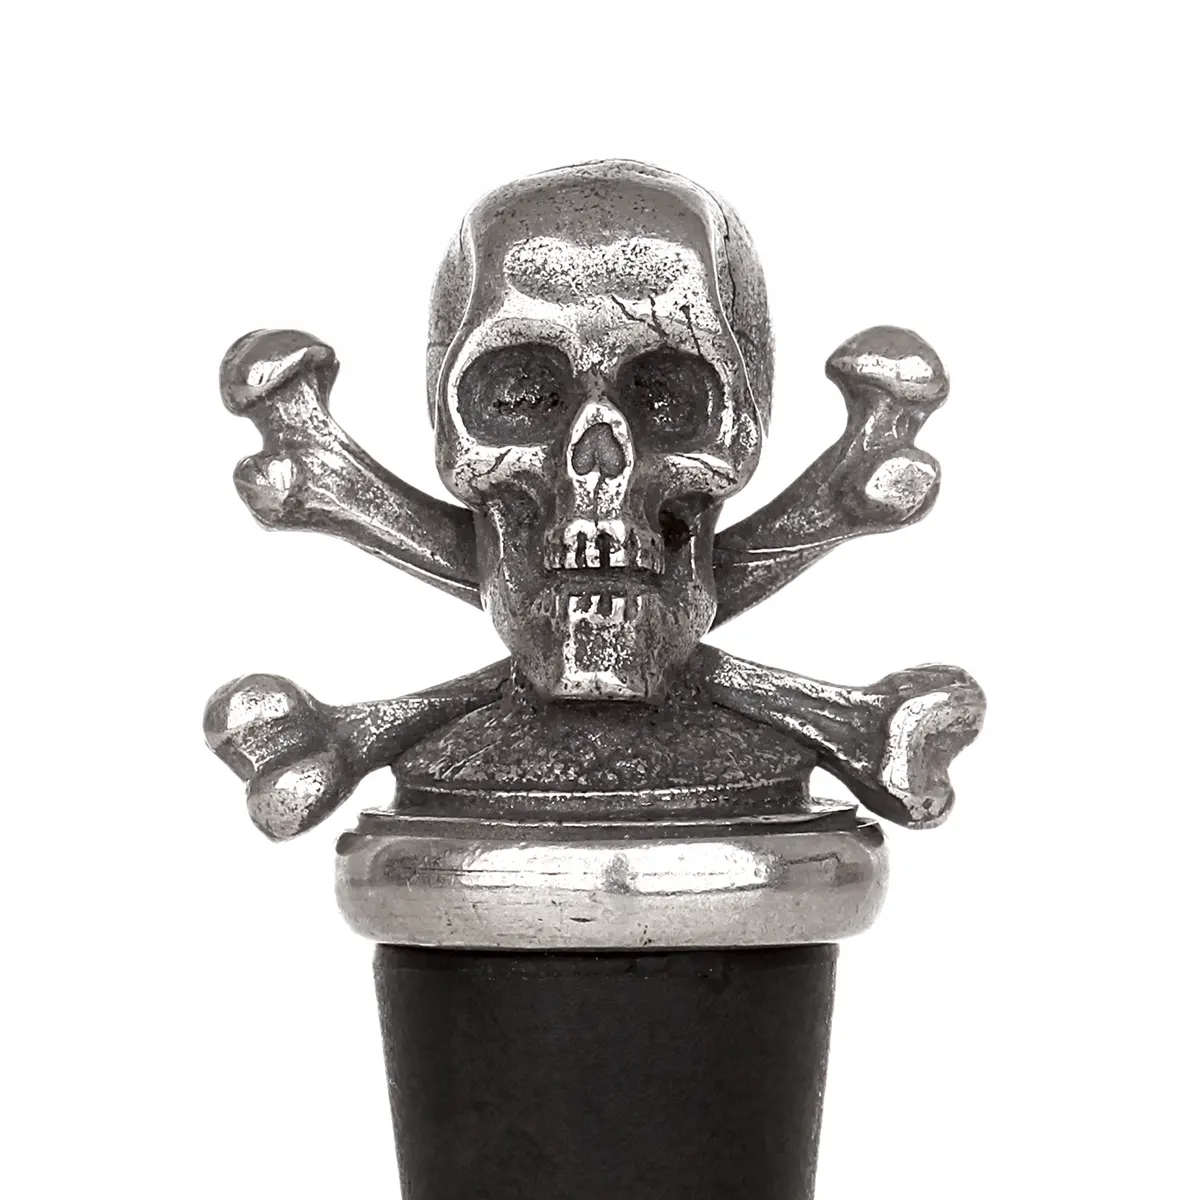 Skull & Crossbones Bottle Stopper - Flaschenverschluss / Stopfen mit Totenkopf aus Zinn